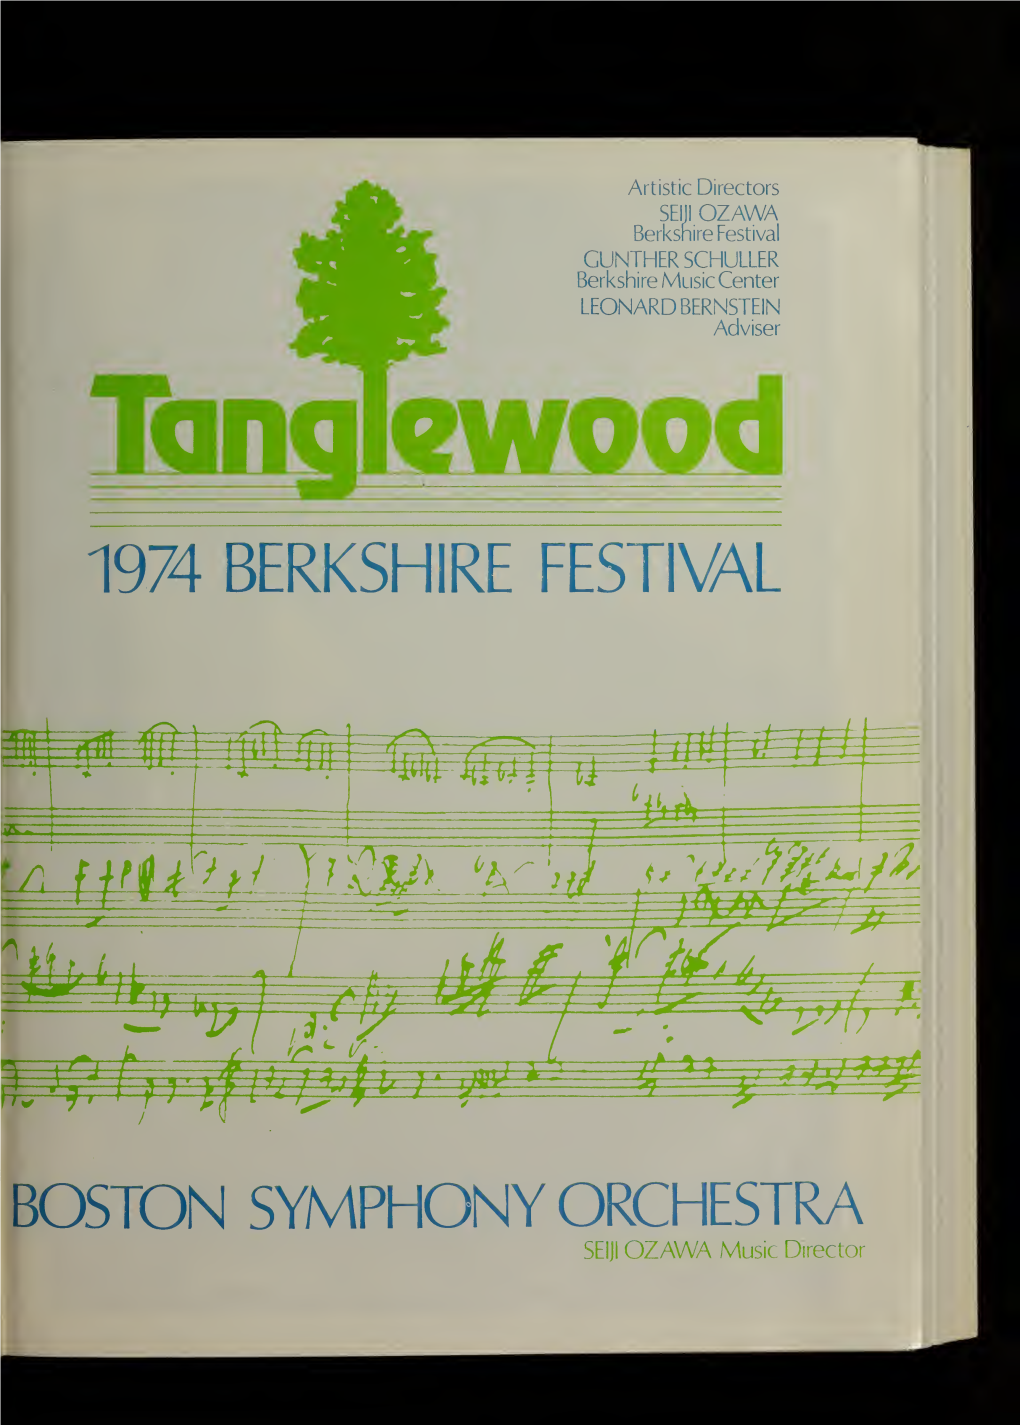 Boston Symphony Orchestra Concert Programs, Summer, 1974